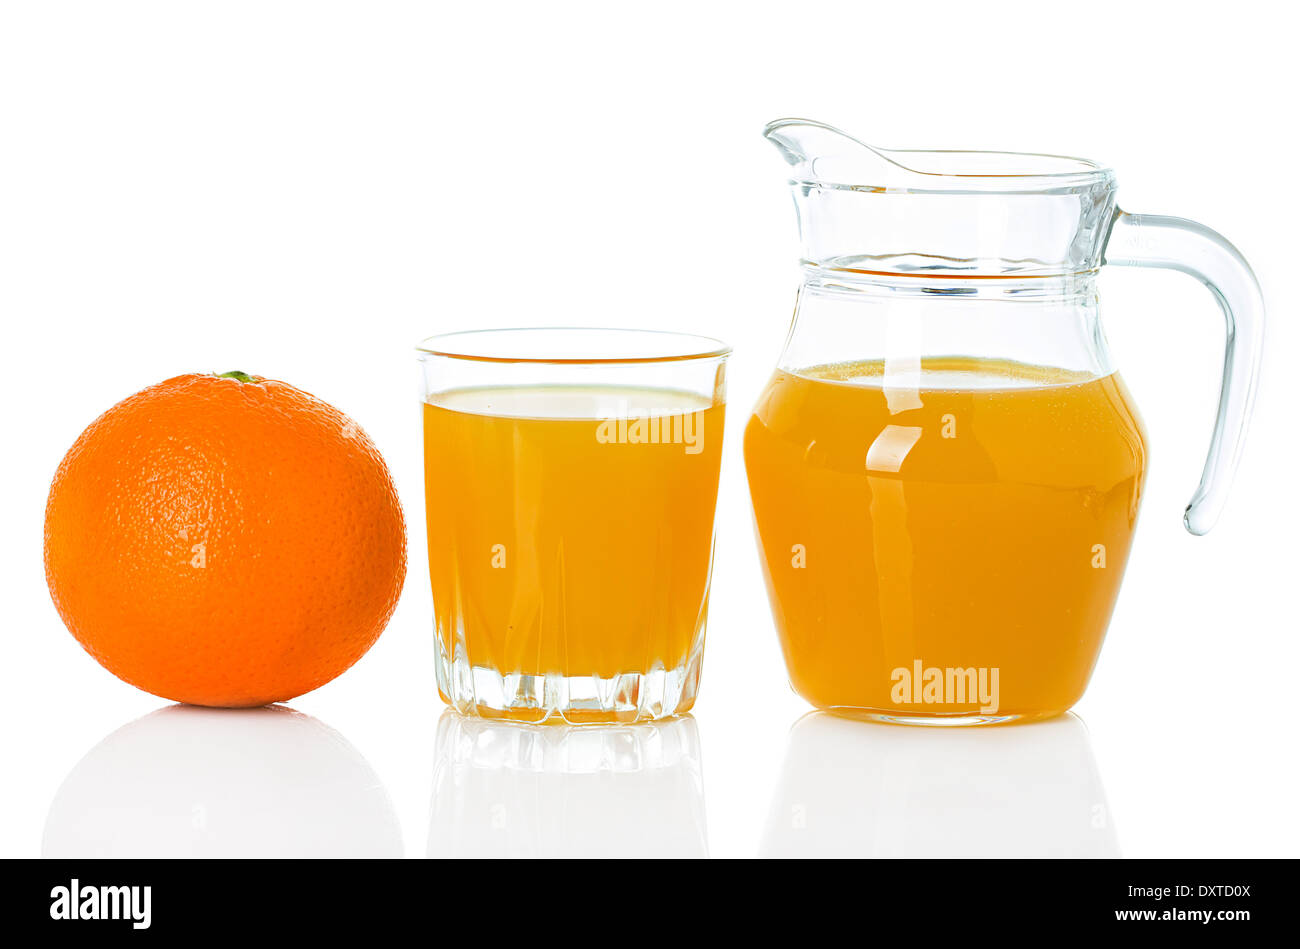 https://c8.alamy.com/comp/DXTD0X/orange-juice-DXTD0X.jpg